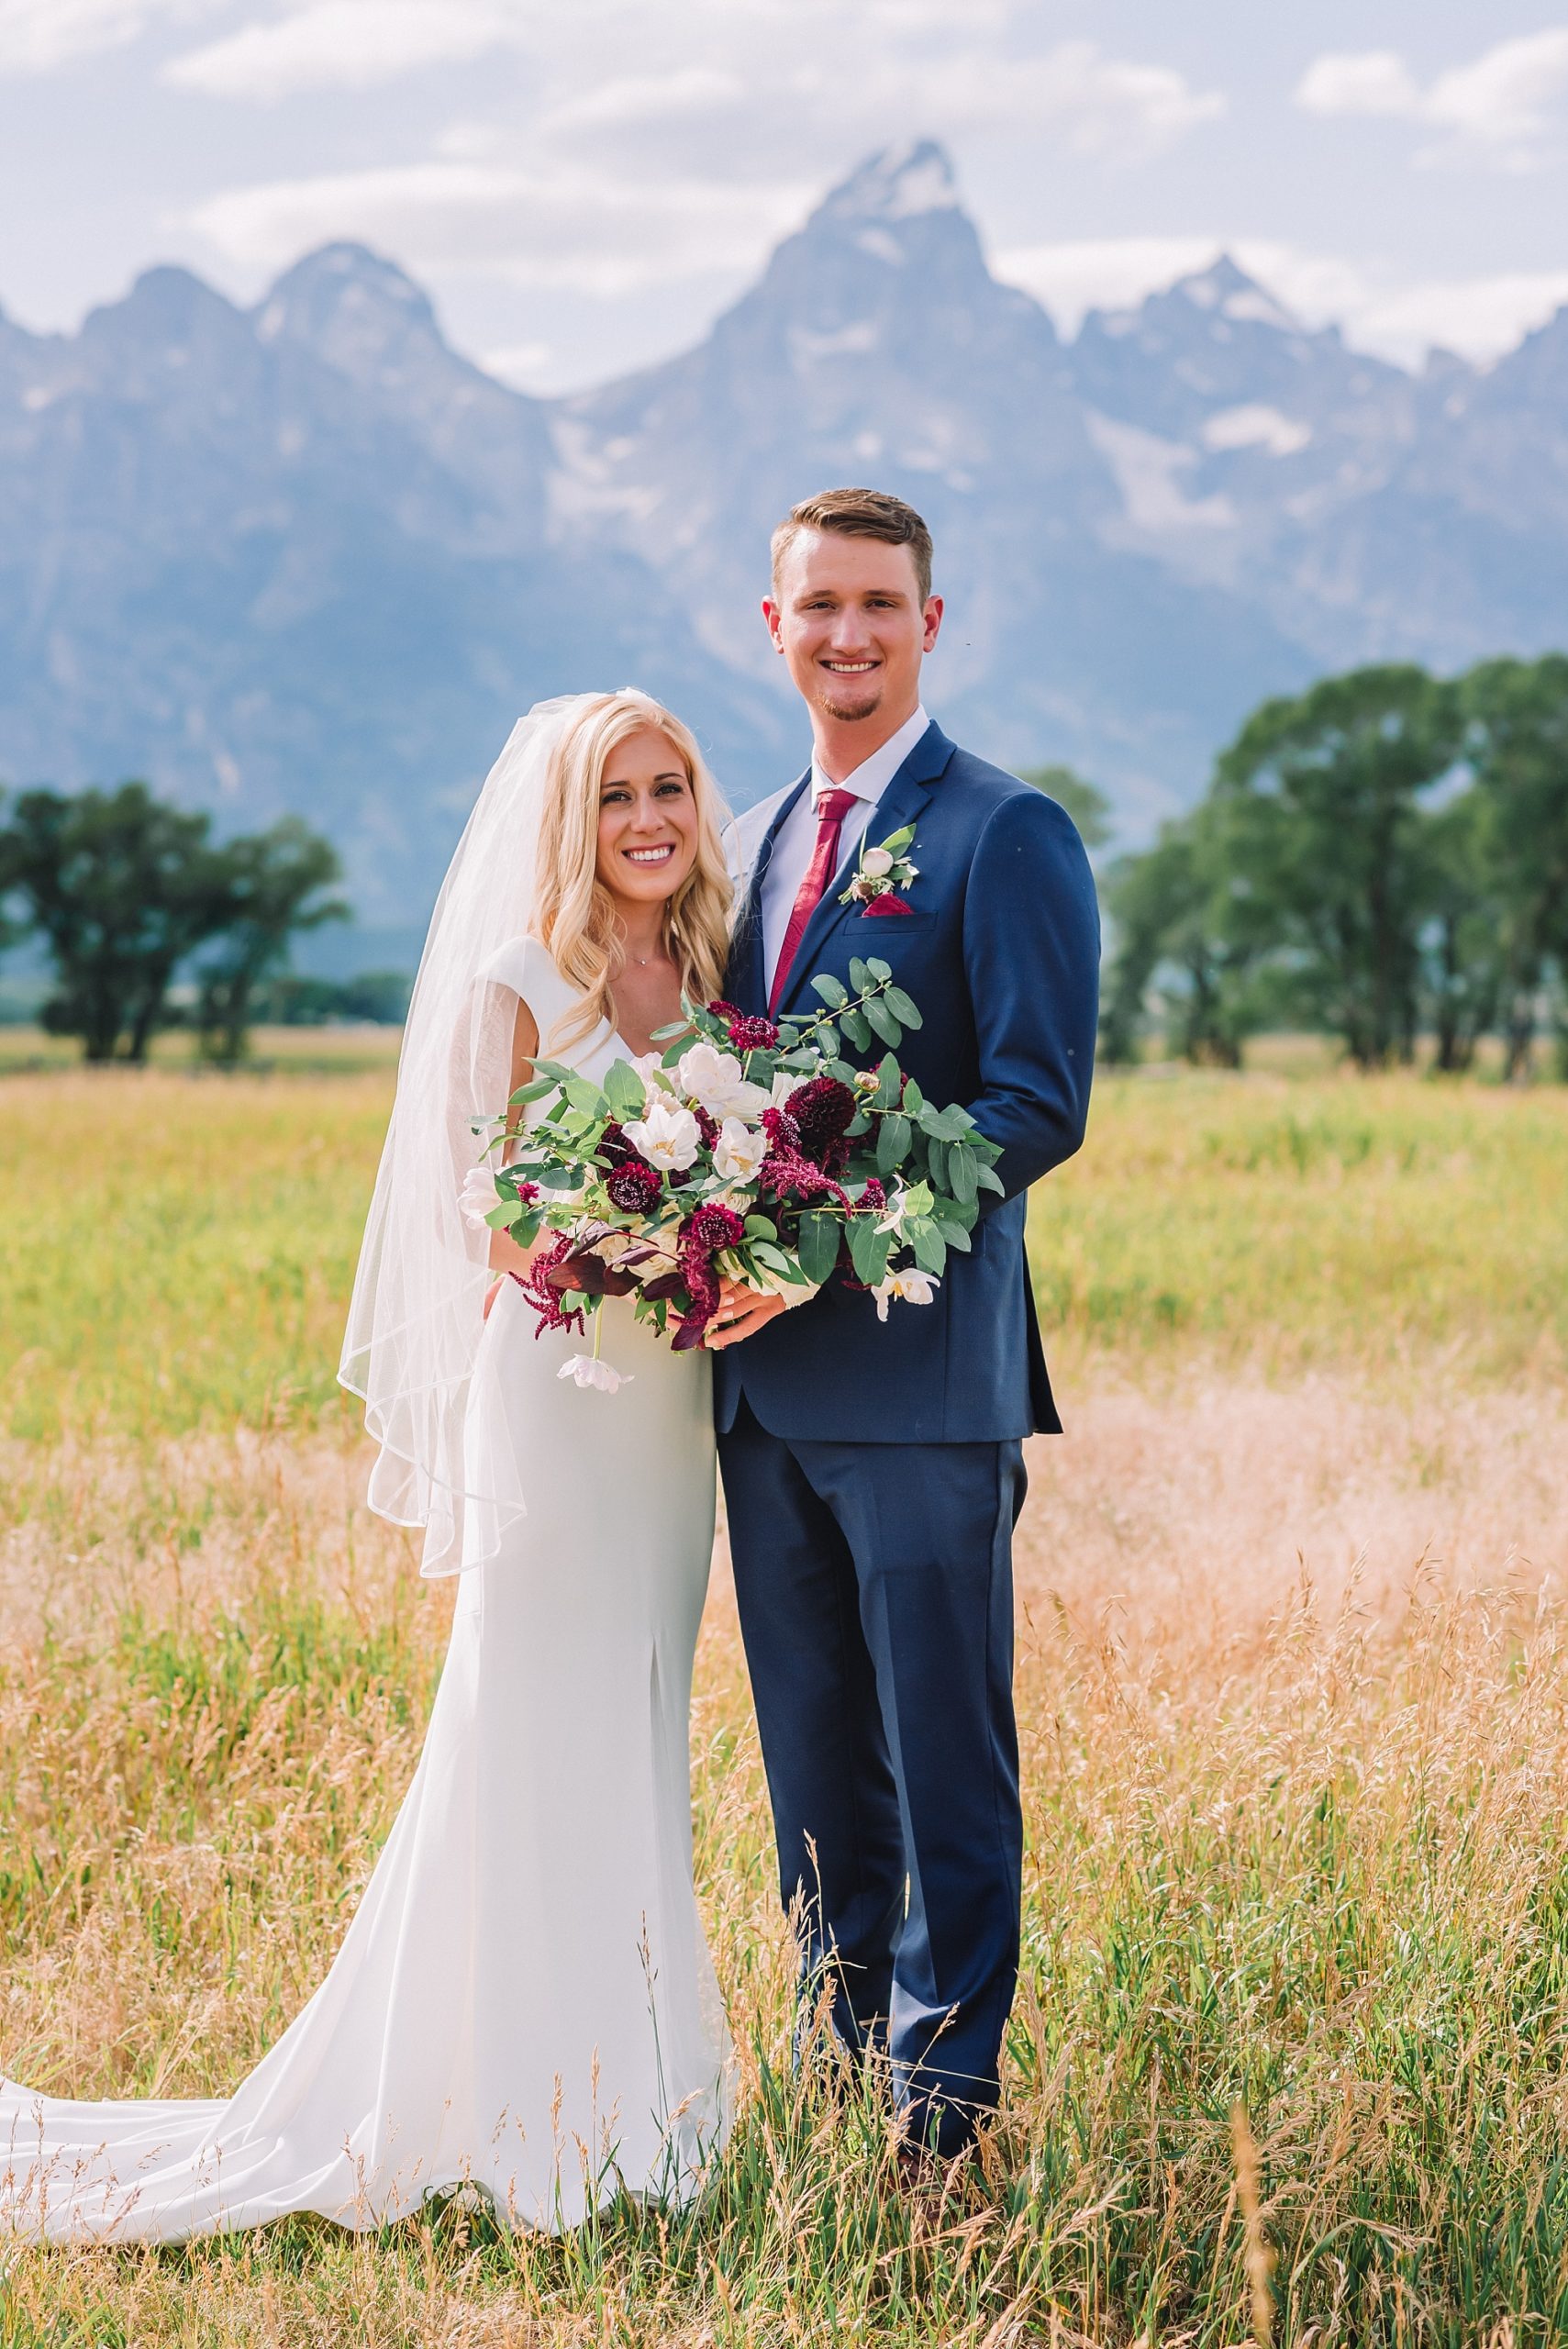 wedding-portraits-at-moulton-barns-on-mormon-row-in-grand-teton-national-park-destination-elopement-romantic-tetons-elope-classic-timeless